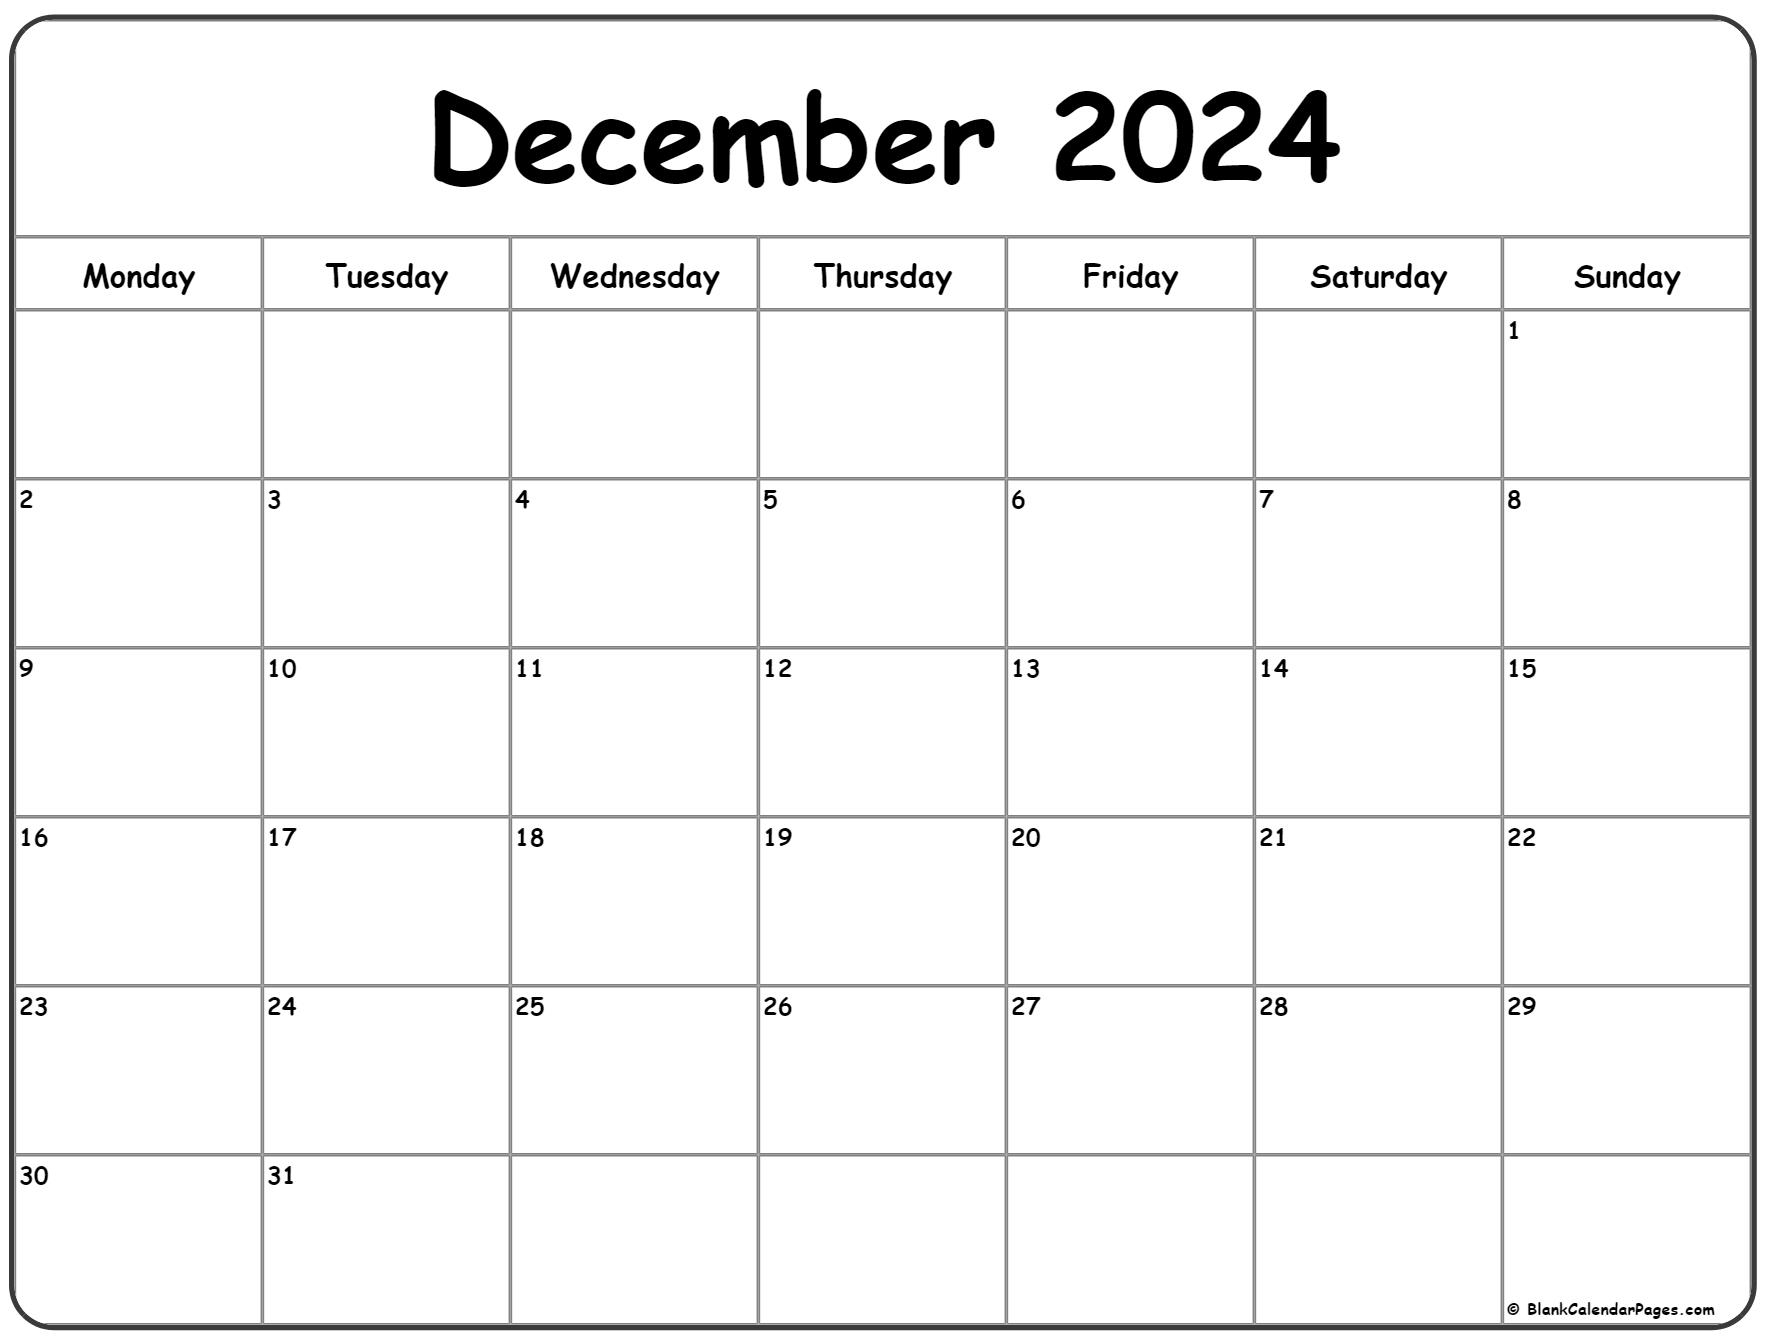 December 2024 Monday Calendar | Monday To Sunday for December 2024 Printable Calendar